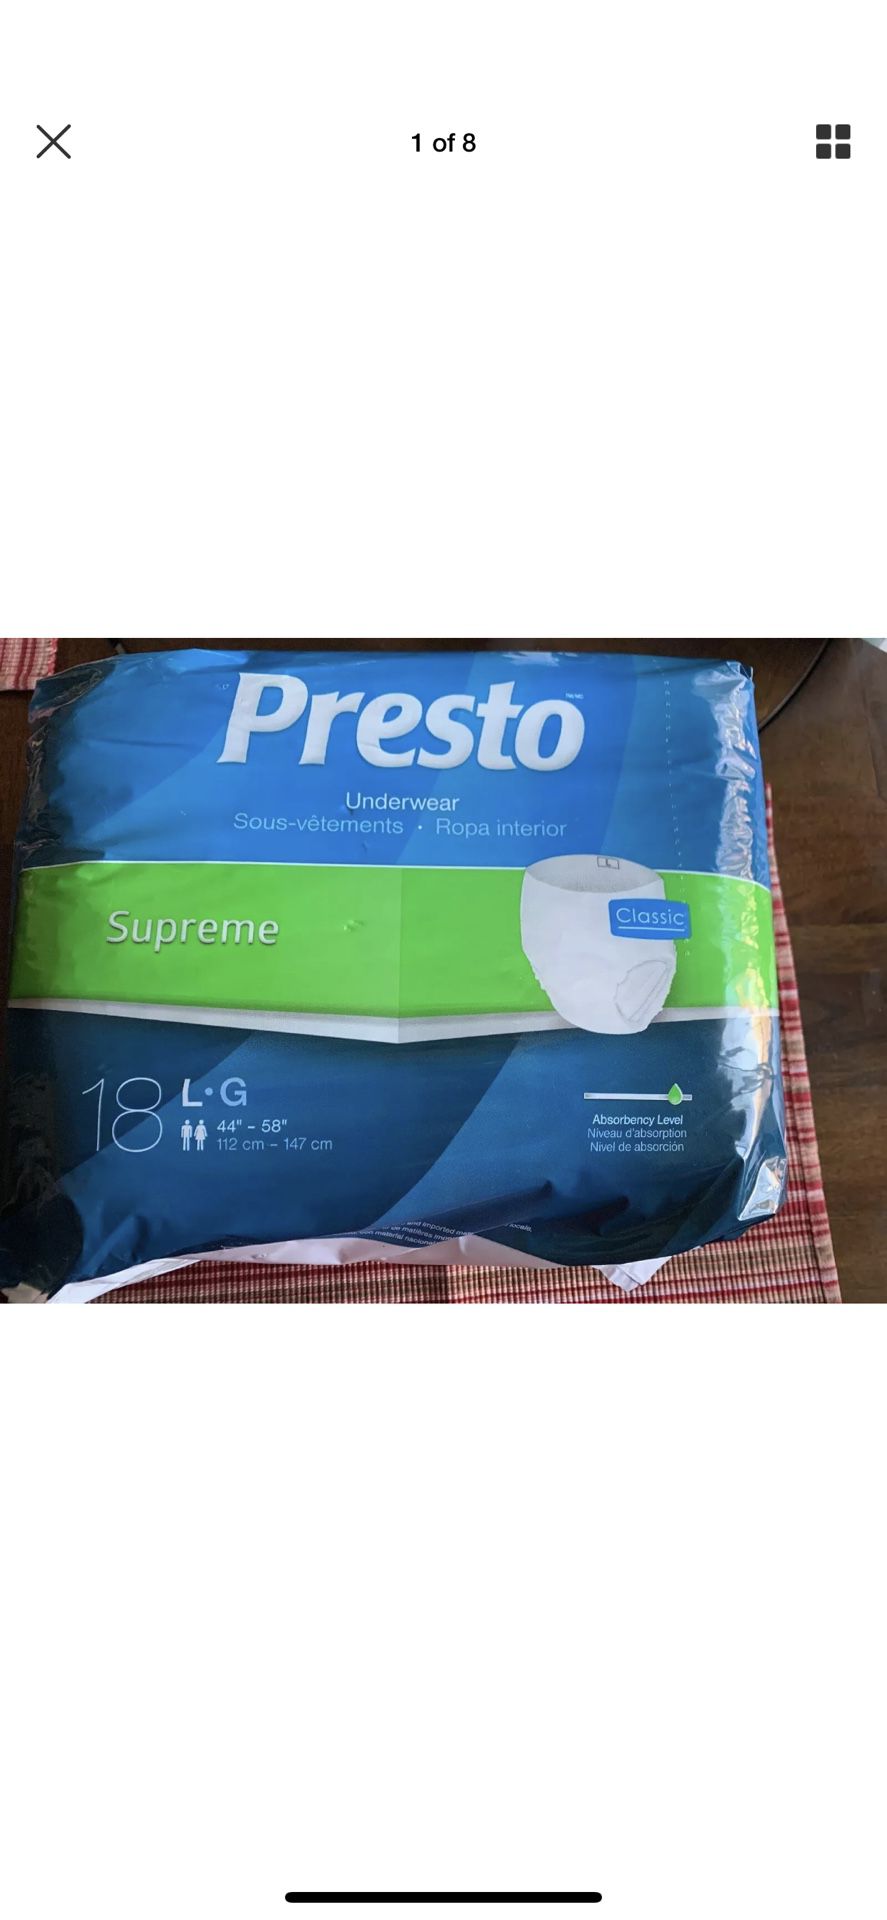 Presto Adult Diapers Large / underwear size L